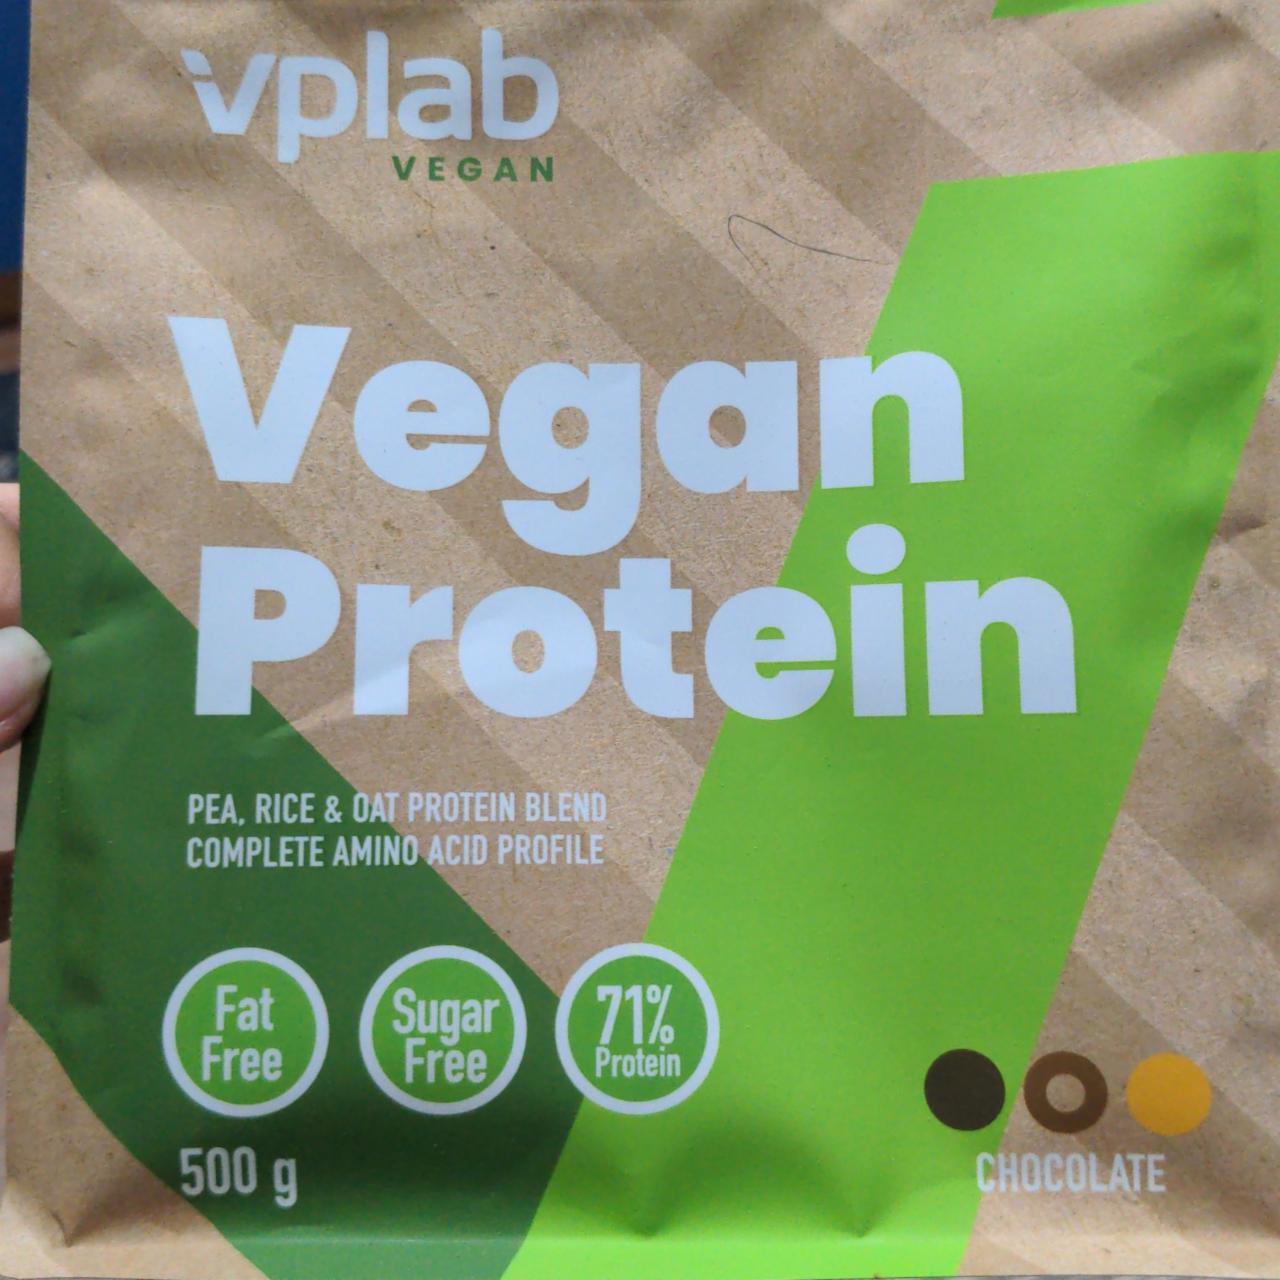 Фото - Веган протеин Vegan protein Vplab nutrition